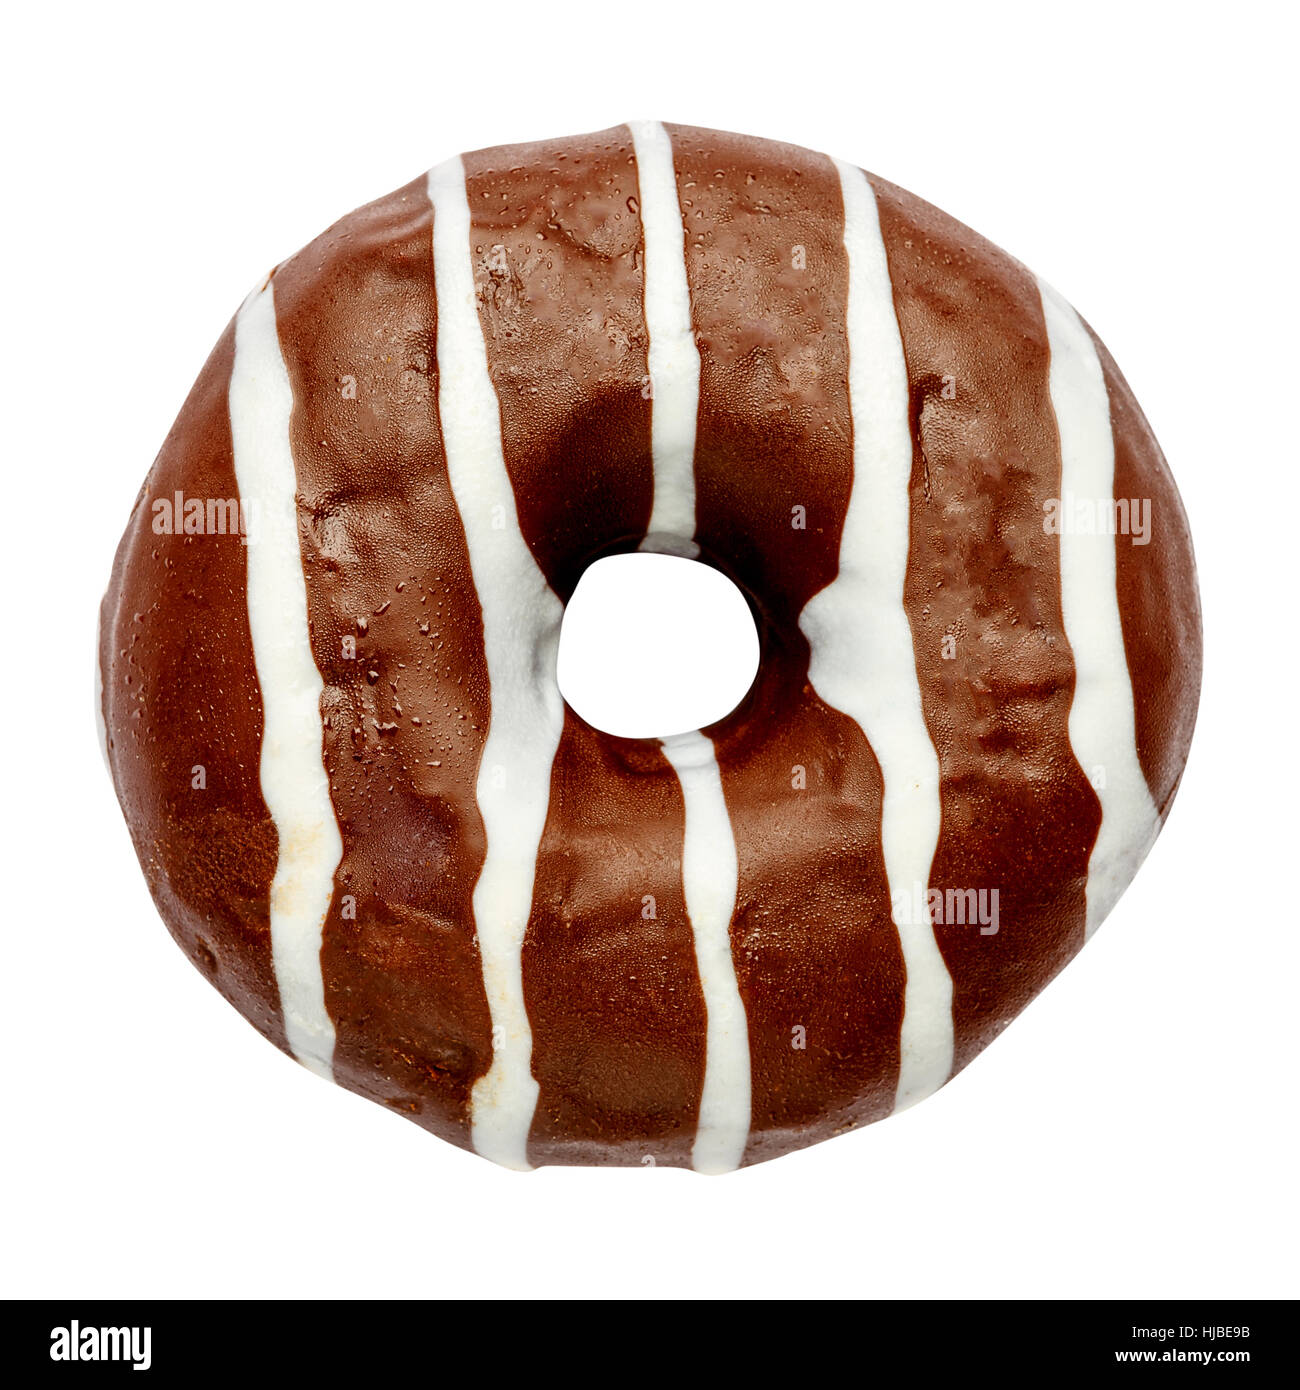 Donut isolated on white Stock Photo